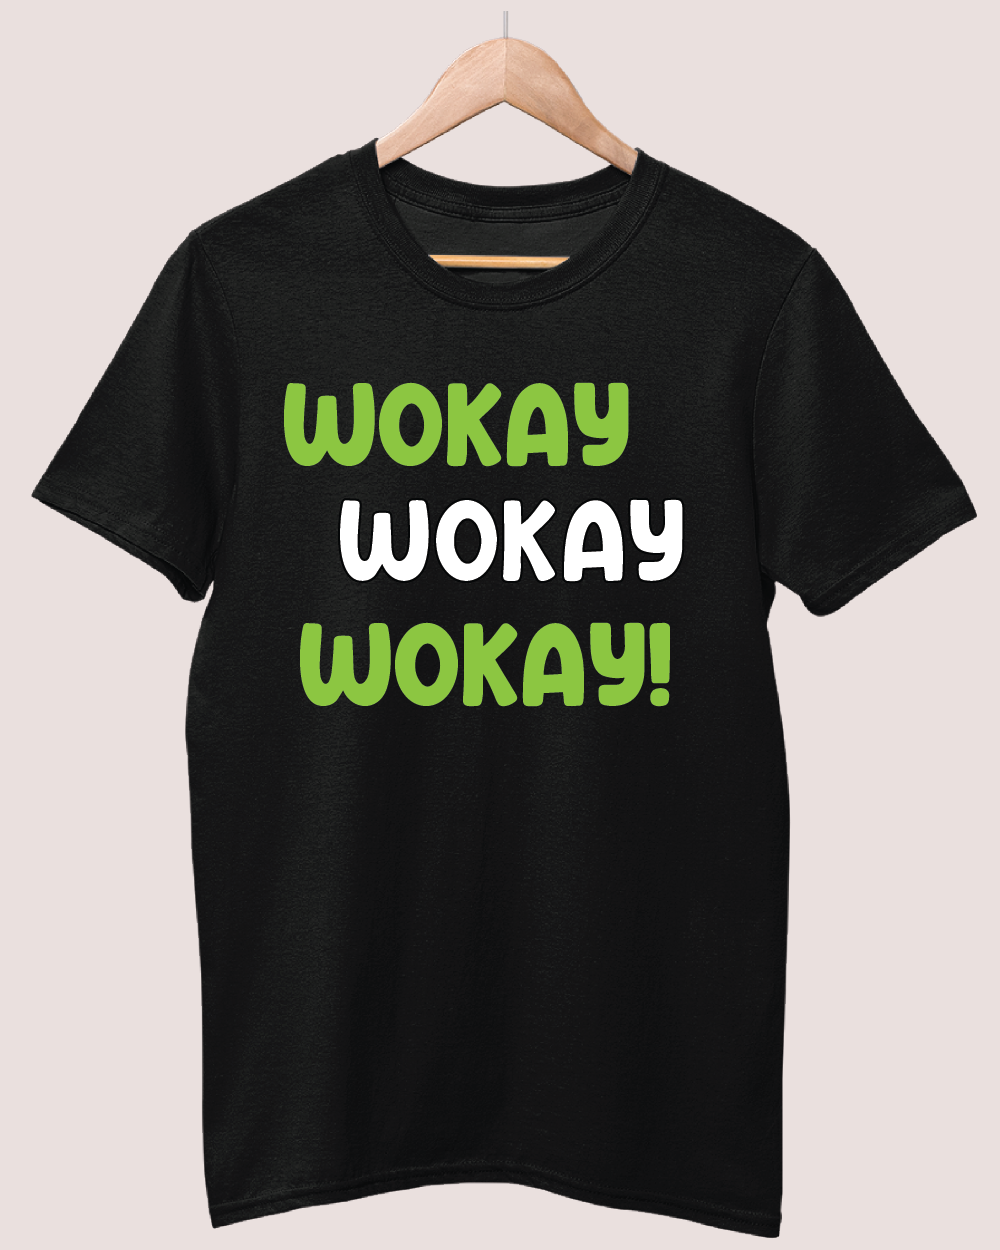 Wokay wokay wokay 1 T-shirt